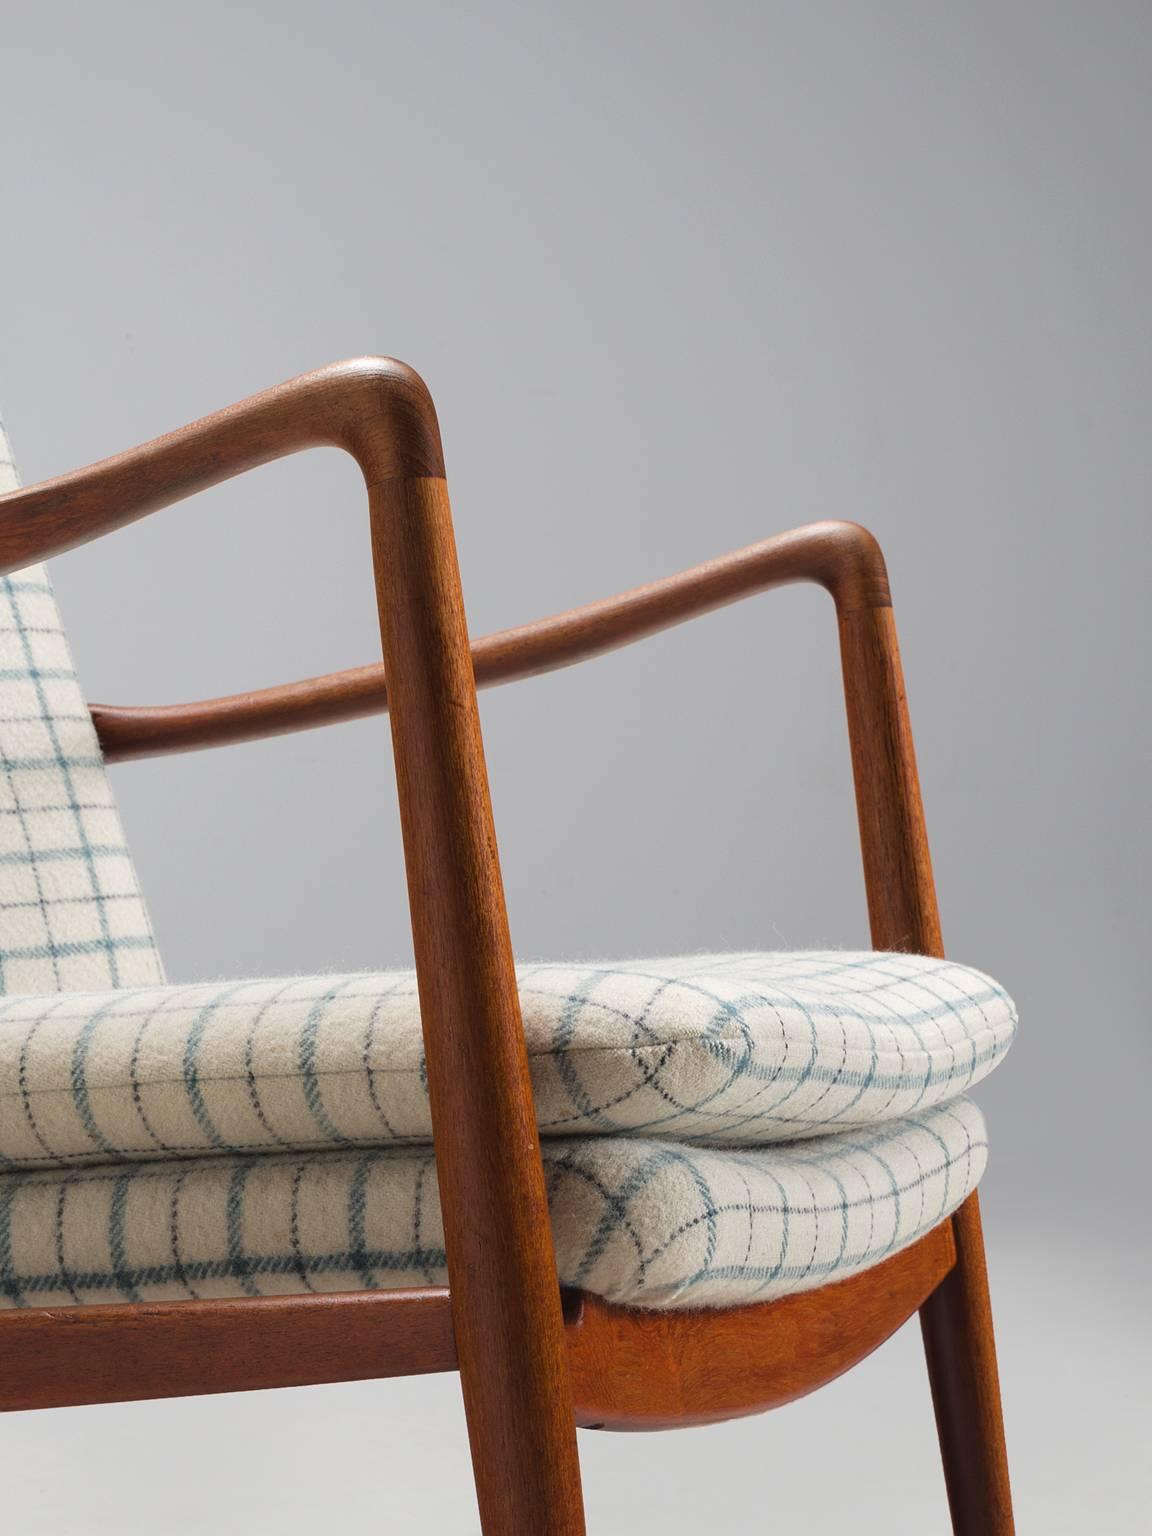 Fabric Finn Juhl Set of 'Westermanns' Fireplace Chairs in Teak